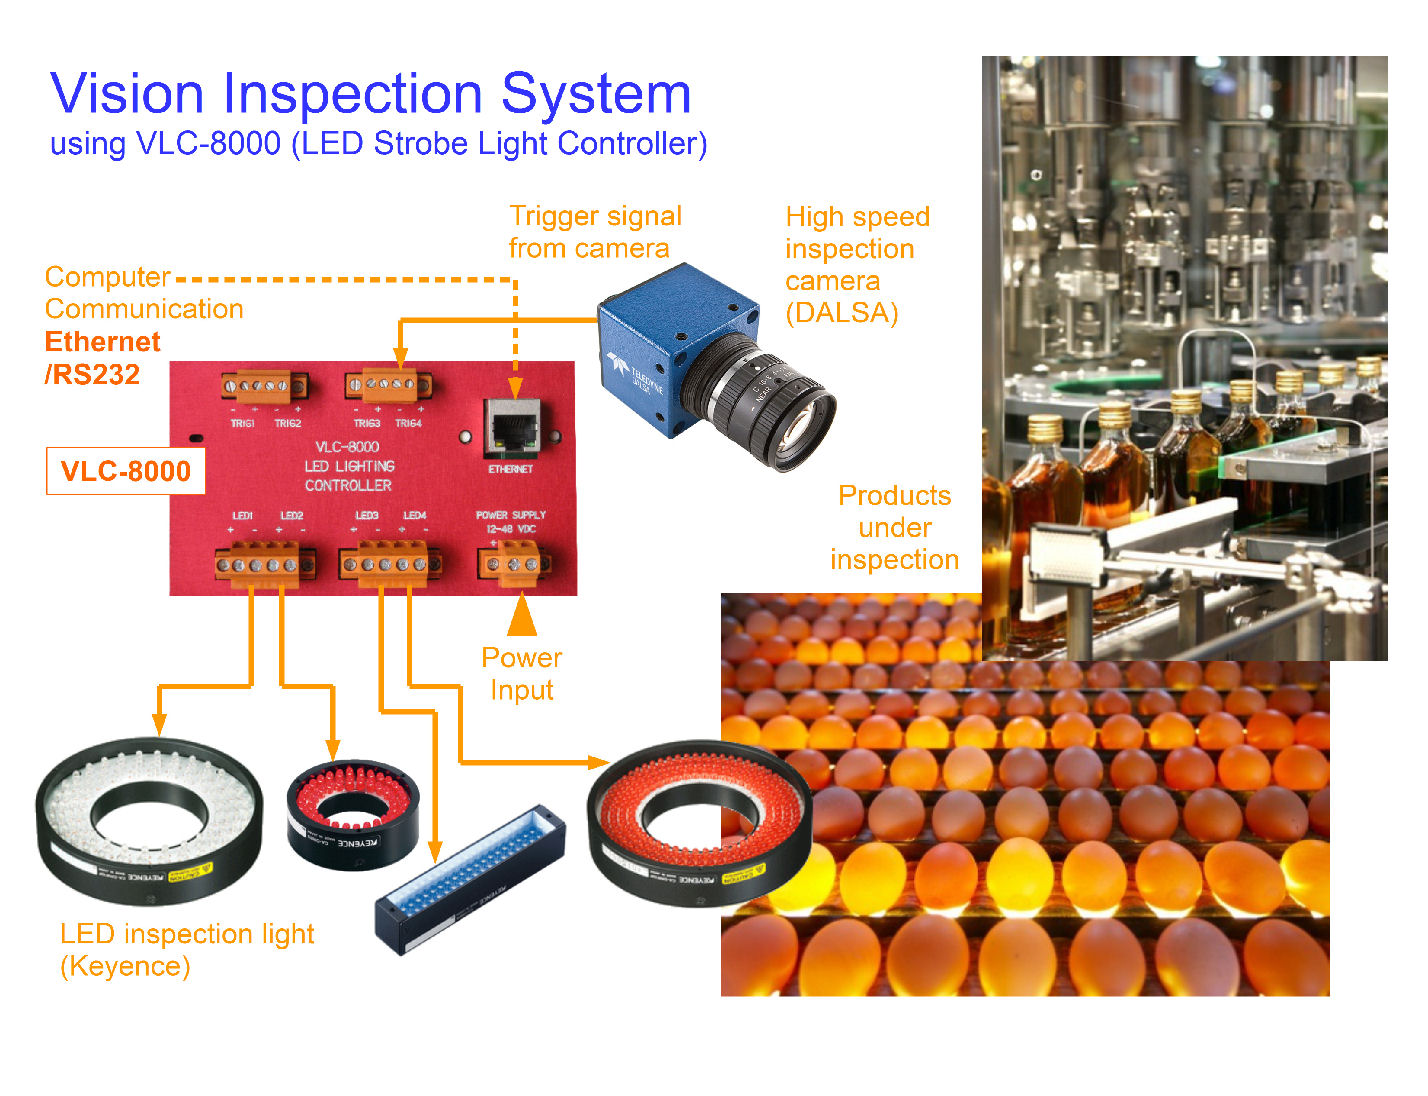 Vision Inspection System using VLC-8000 Strobe Light Controller